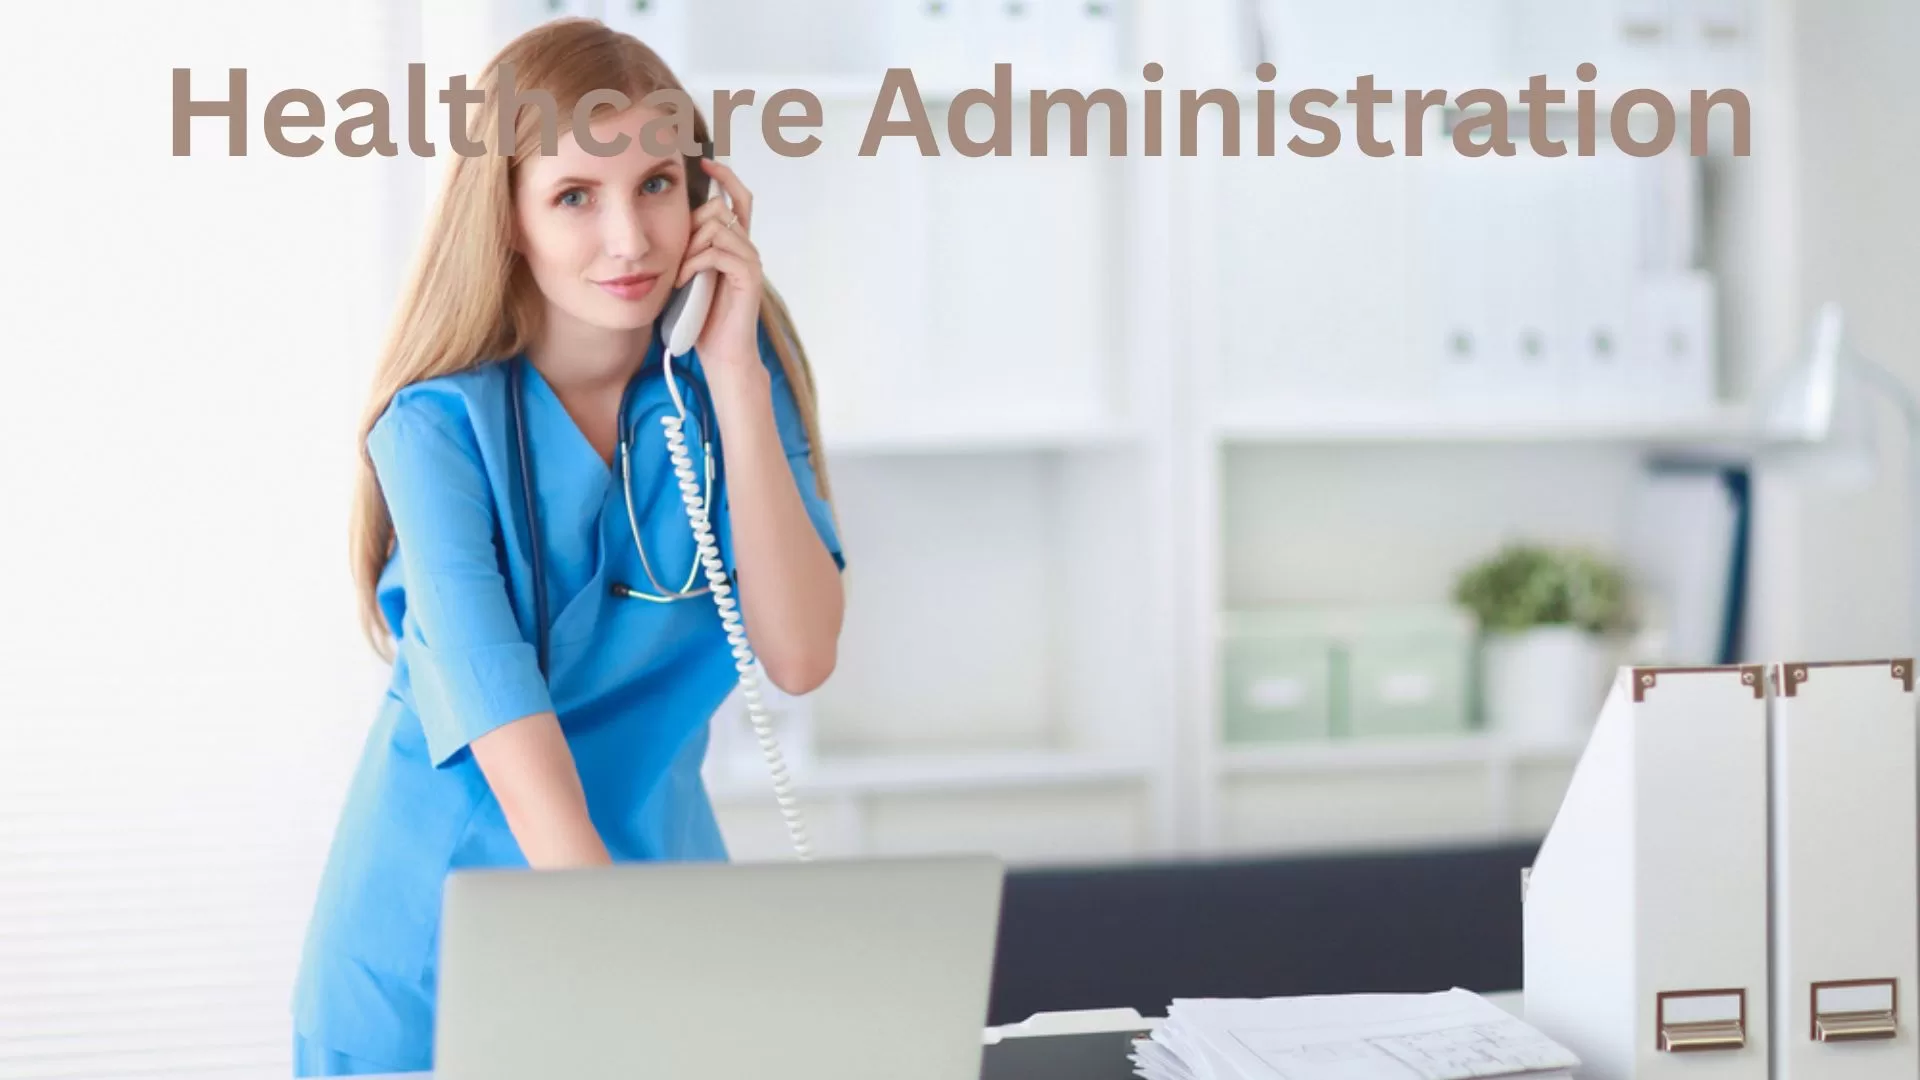 Healthcare administration | edtechreader